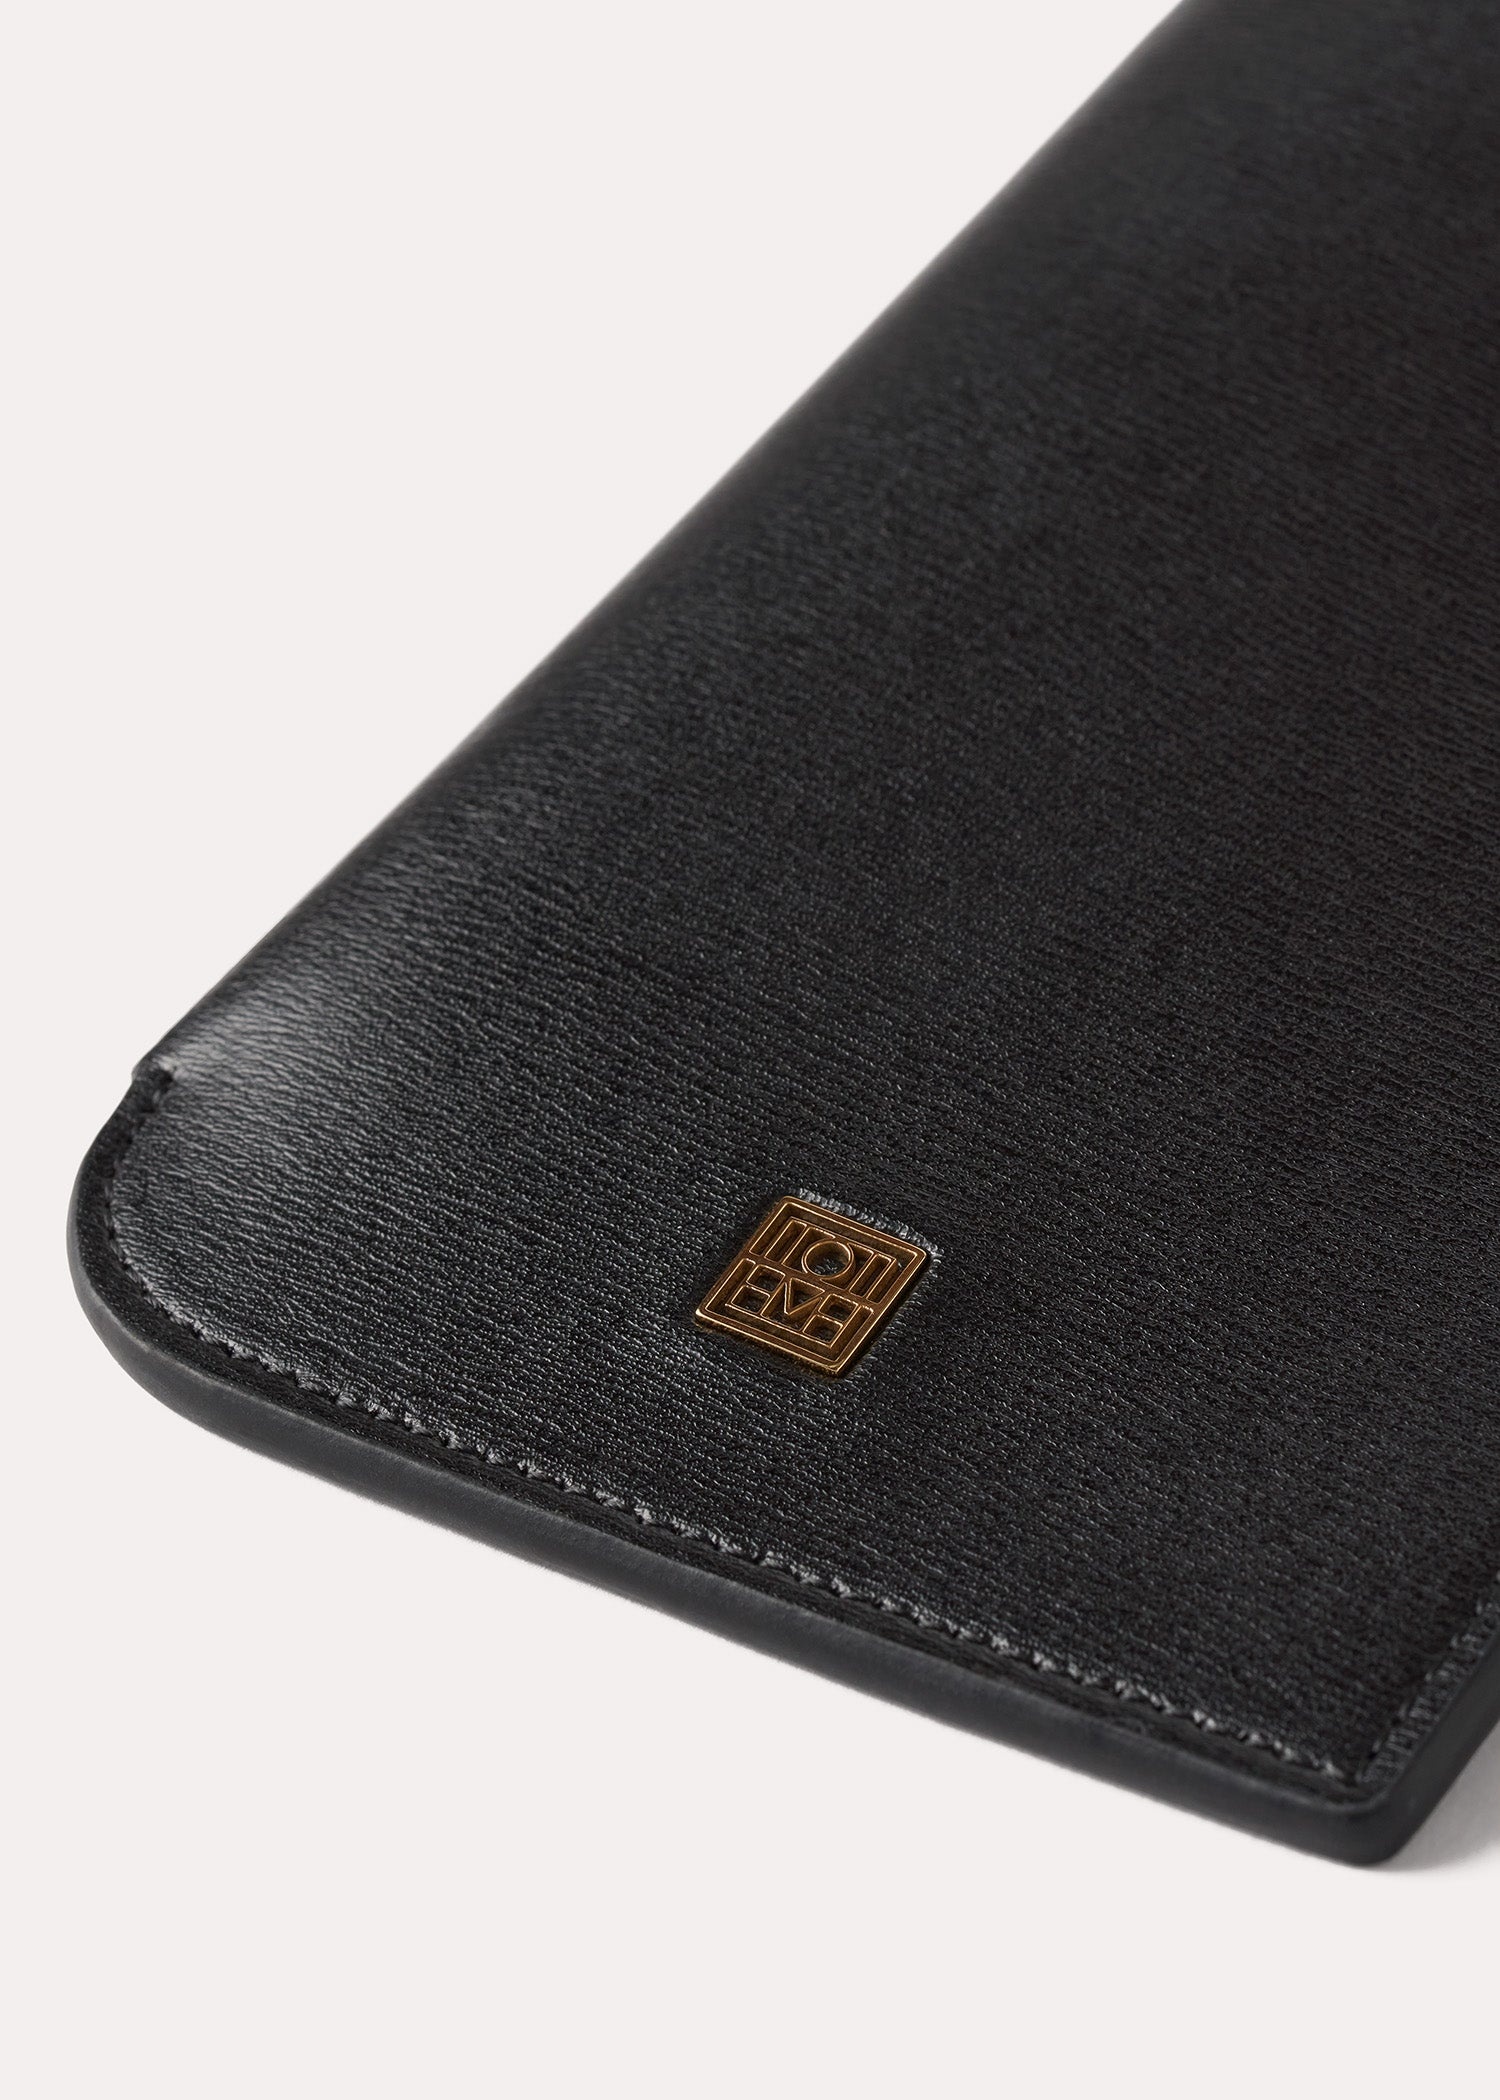 Pocket leather pouch black - 5